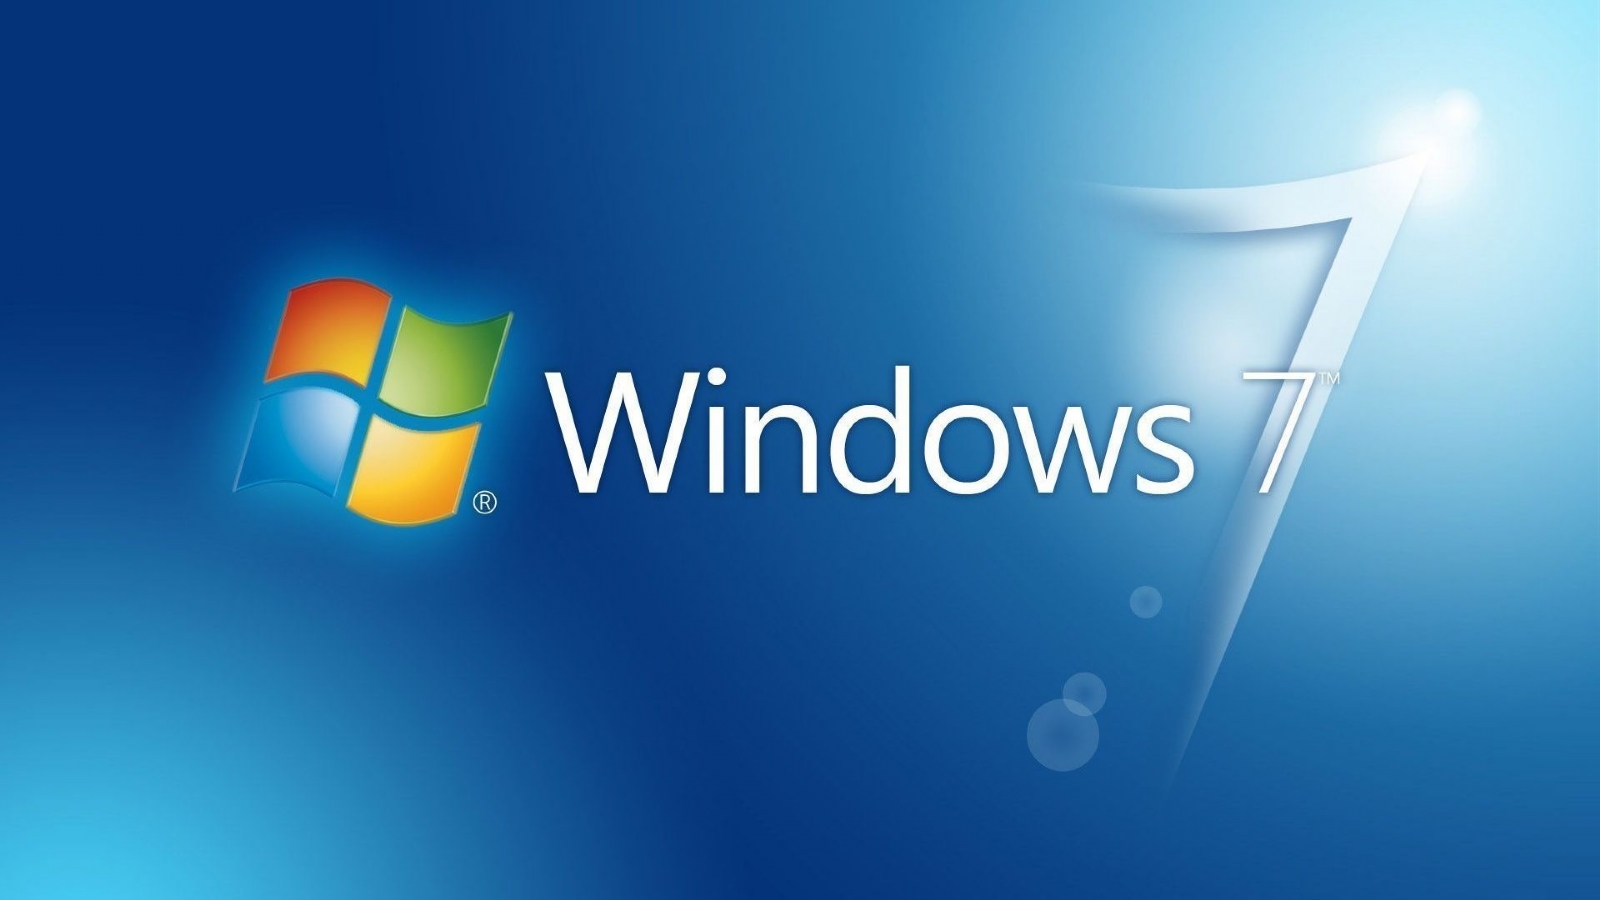 Windows Desktop Image